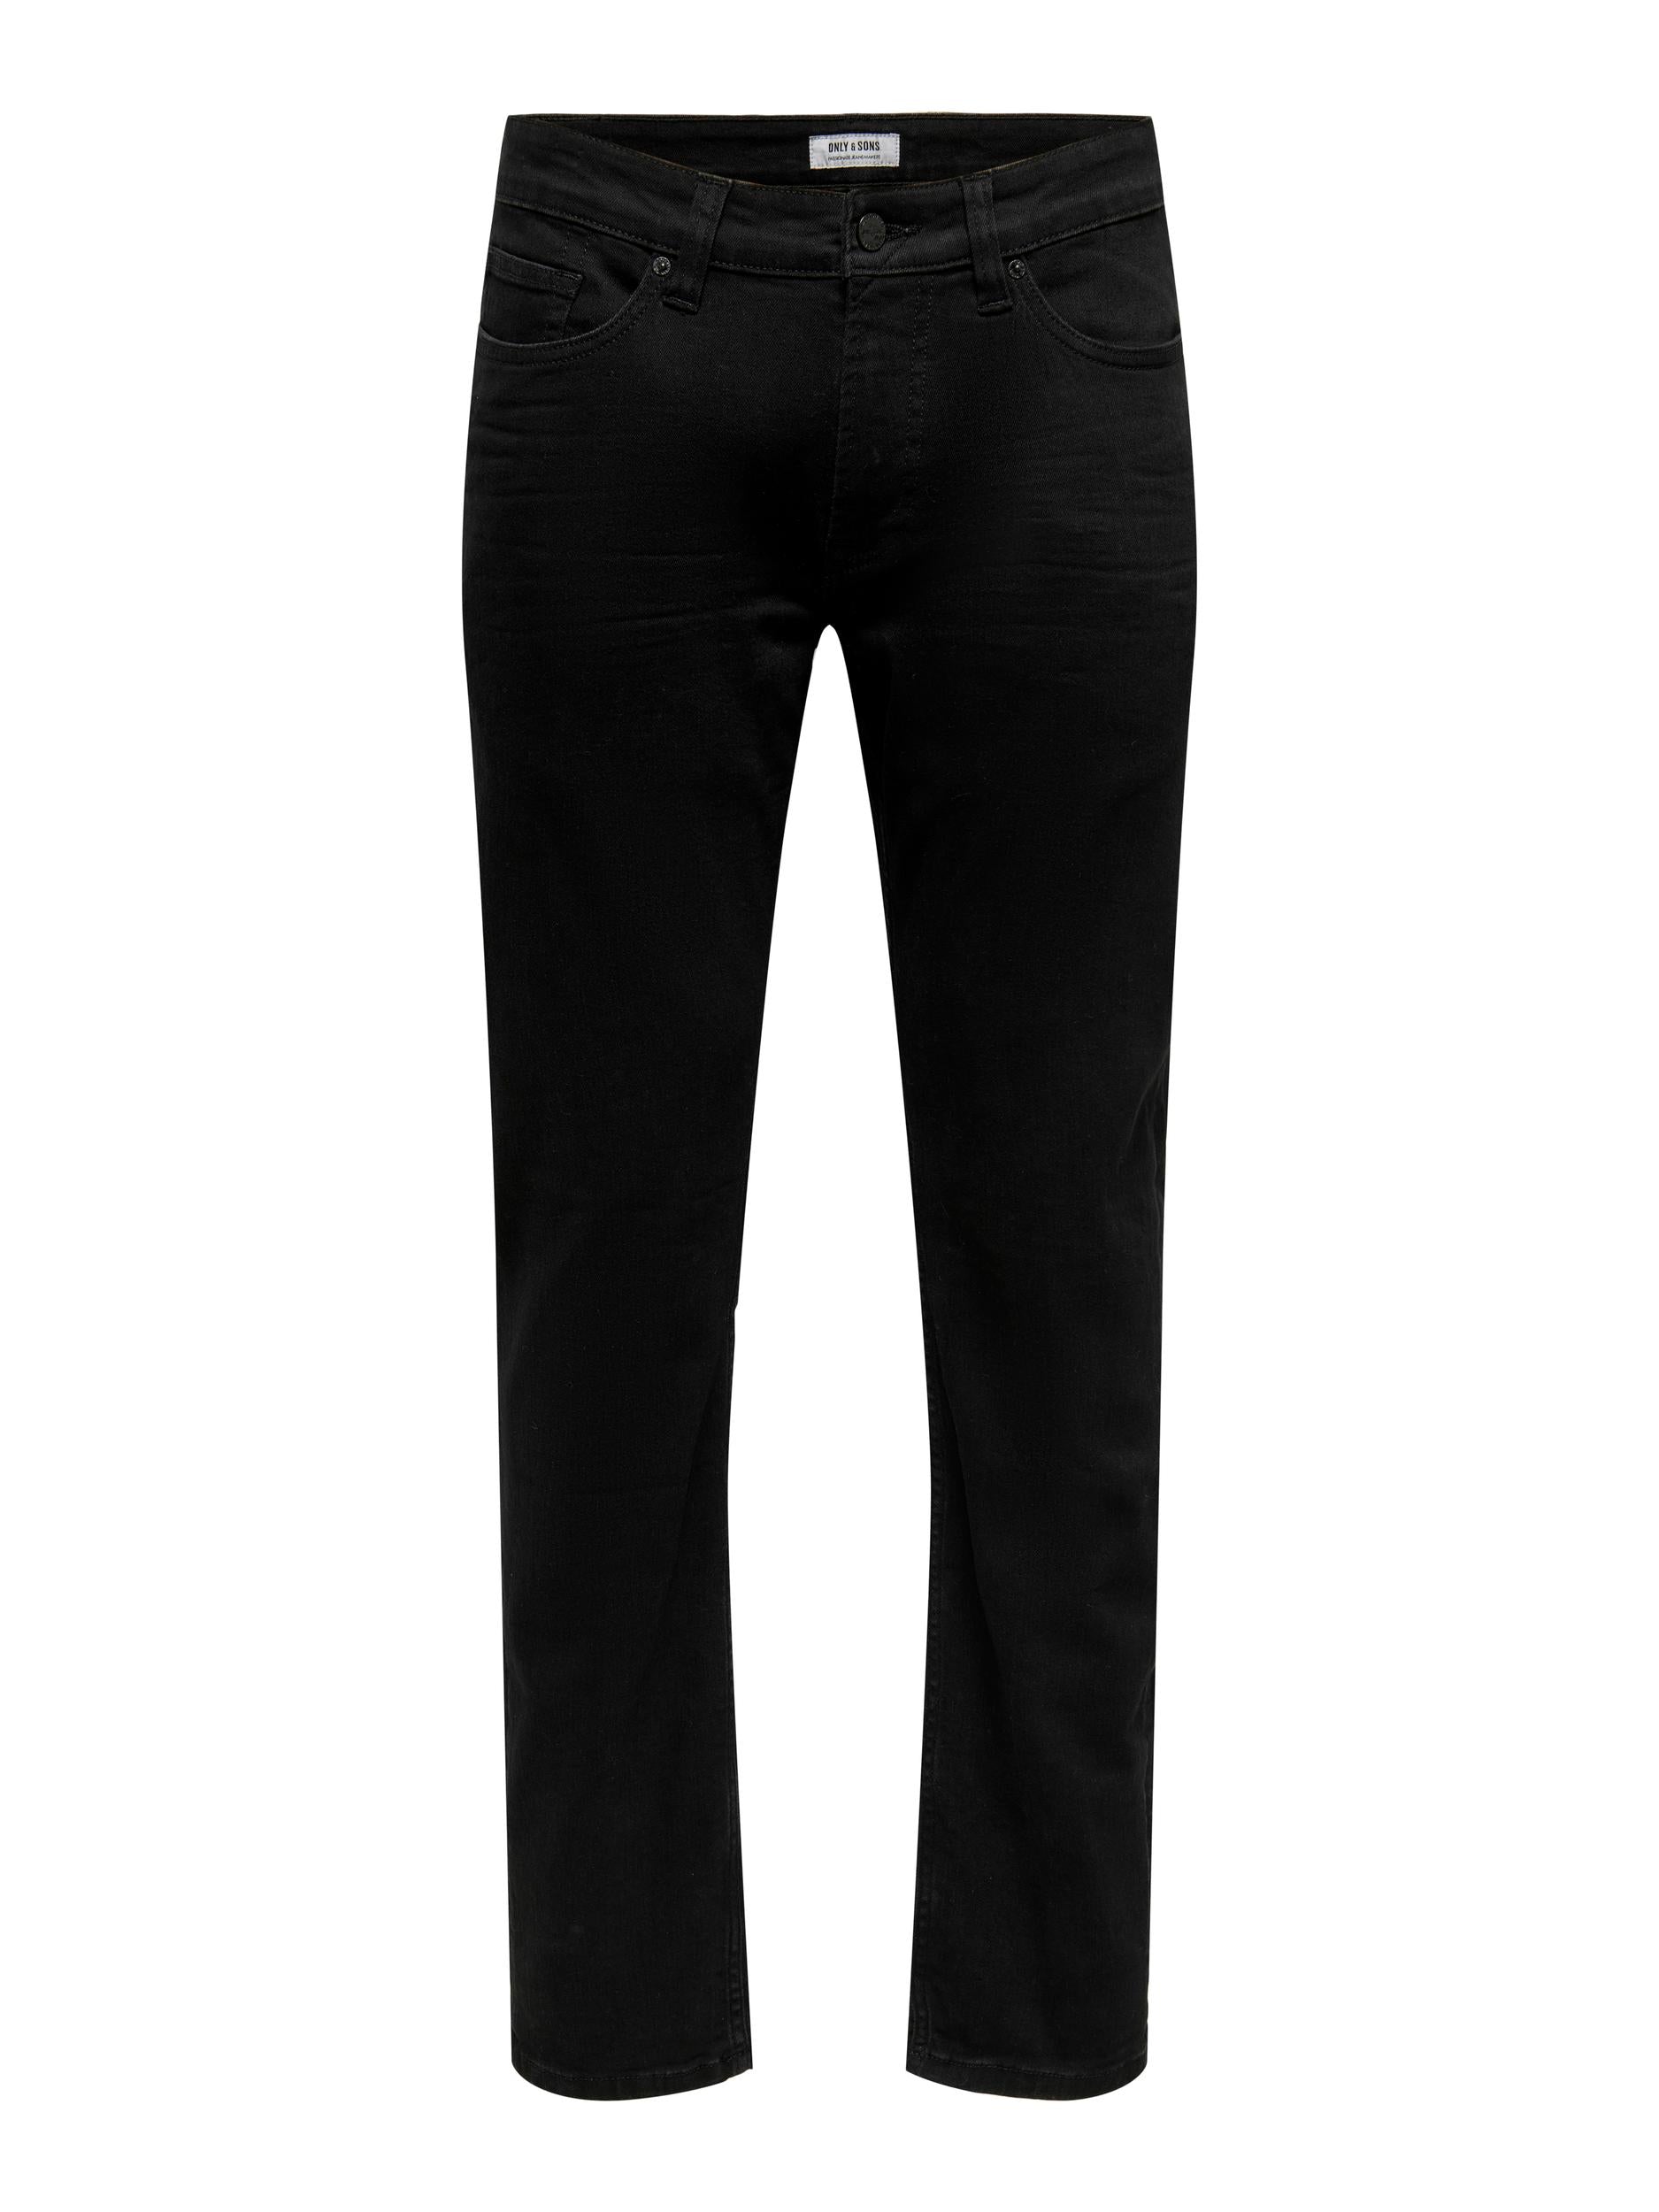 Weft Reg Black 2956 Jeans - Black Denim